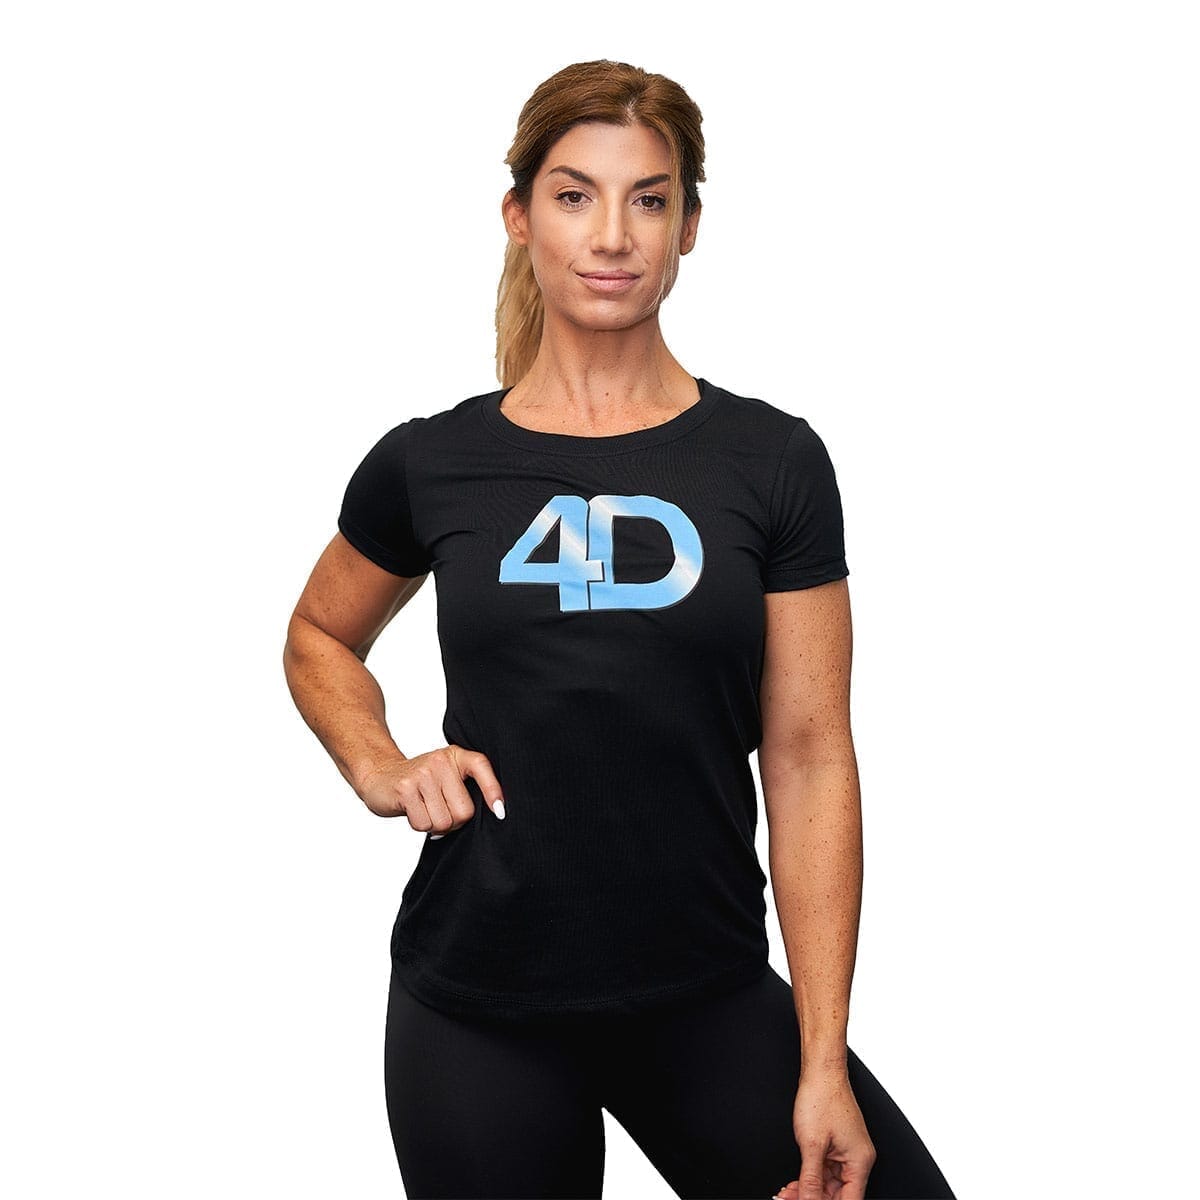 T-Shirt Shirts & Tops 4D S Female 